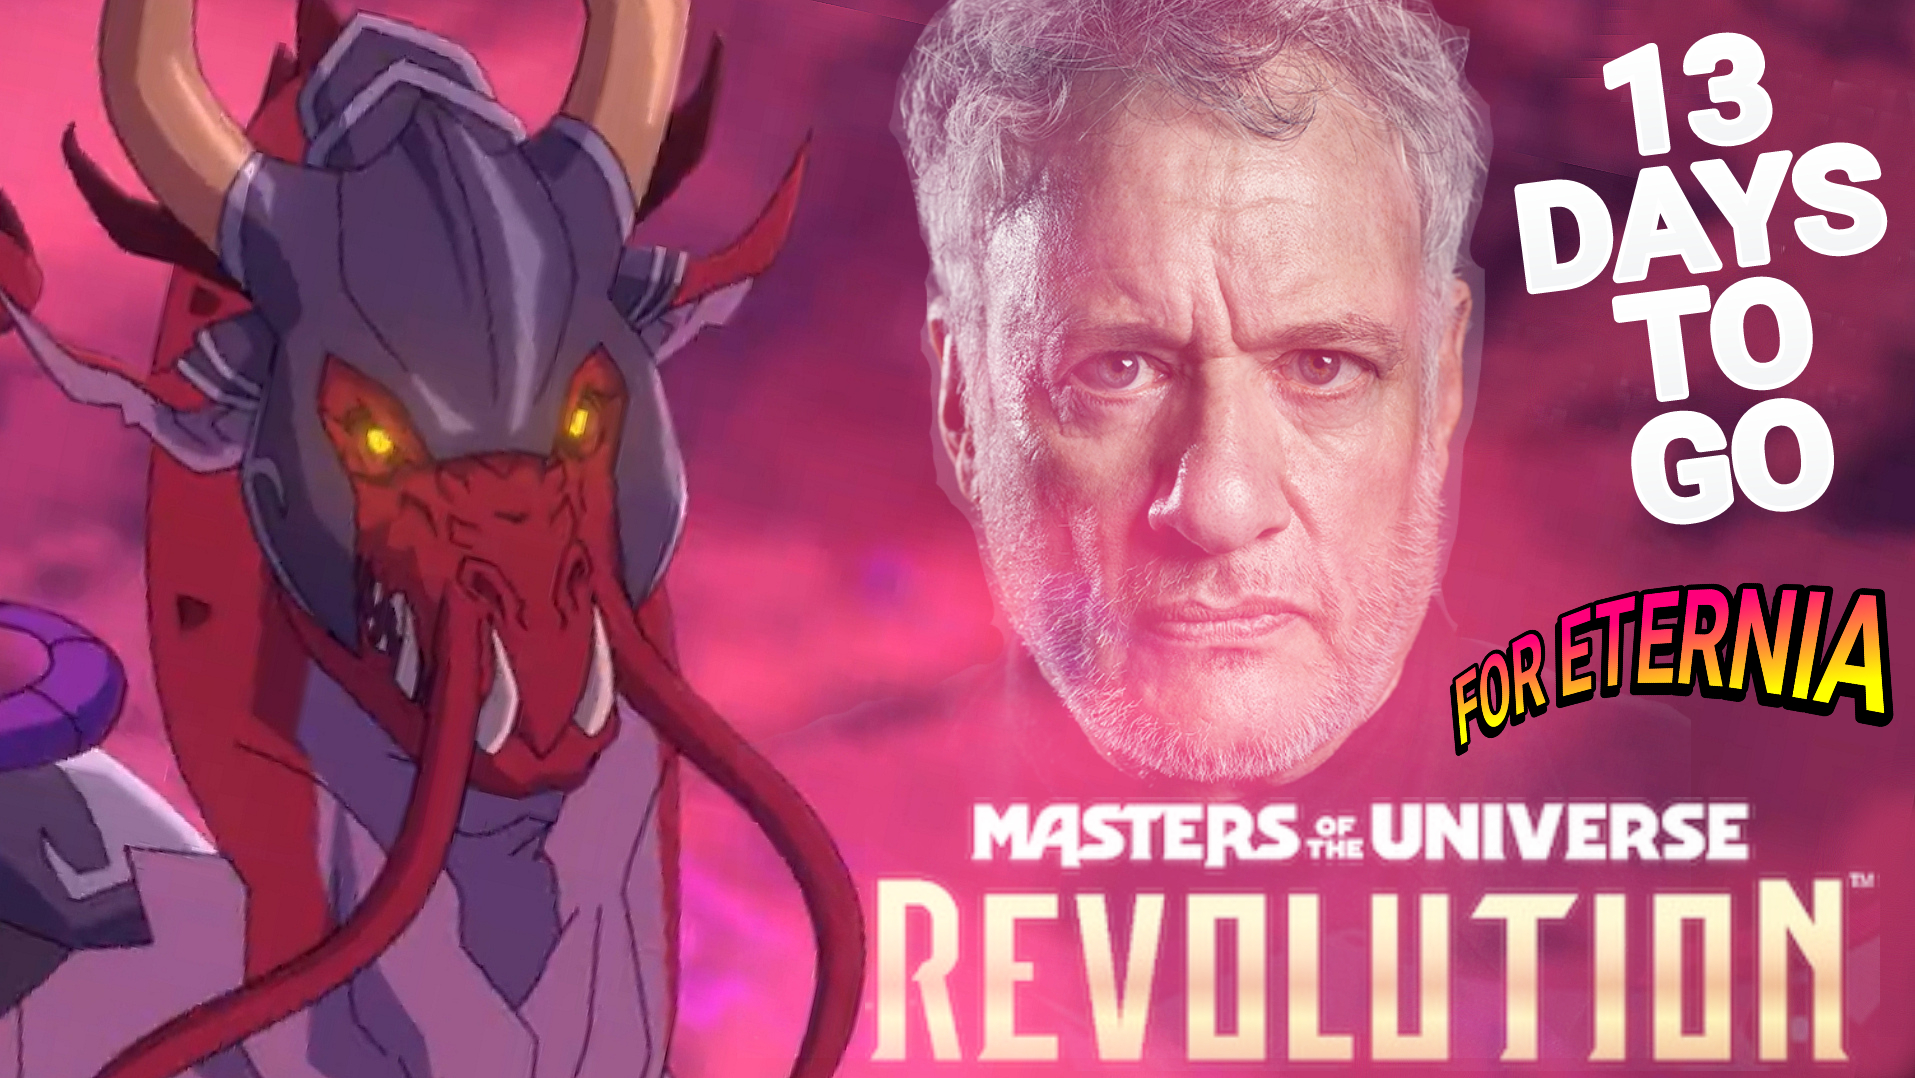 Star Trek alumni John De Lancie joins the voice cast of ”Masters of the Universe: Revolution” as Granamyr